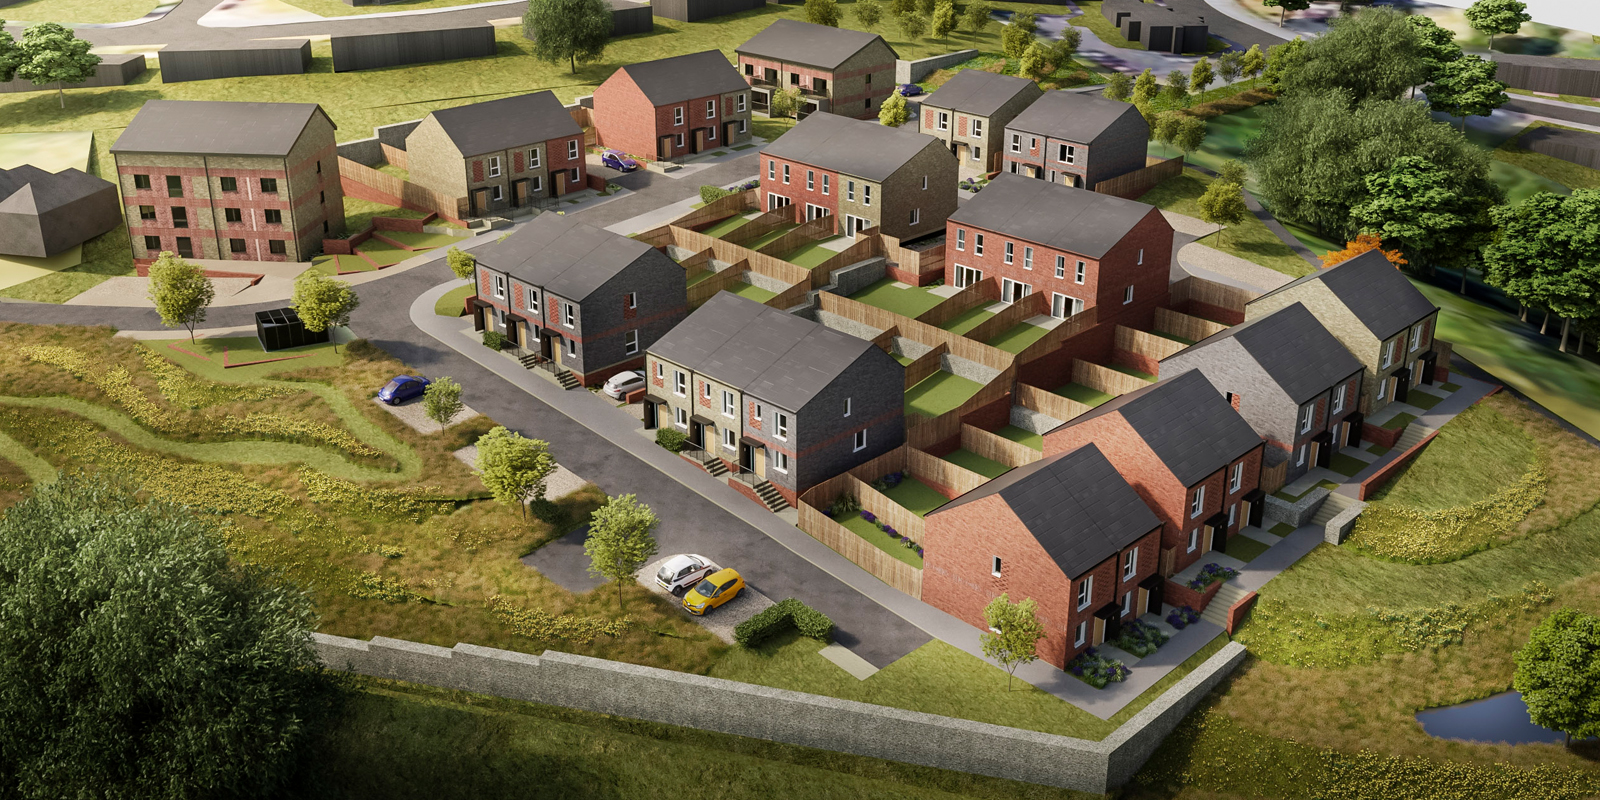 3D rendered new housing development using modern methods of construction